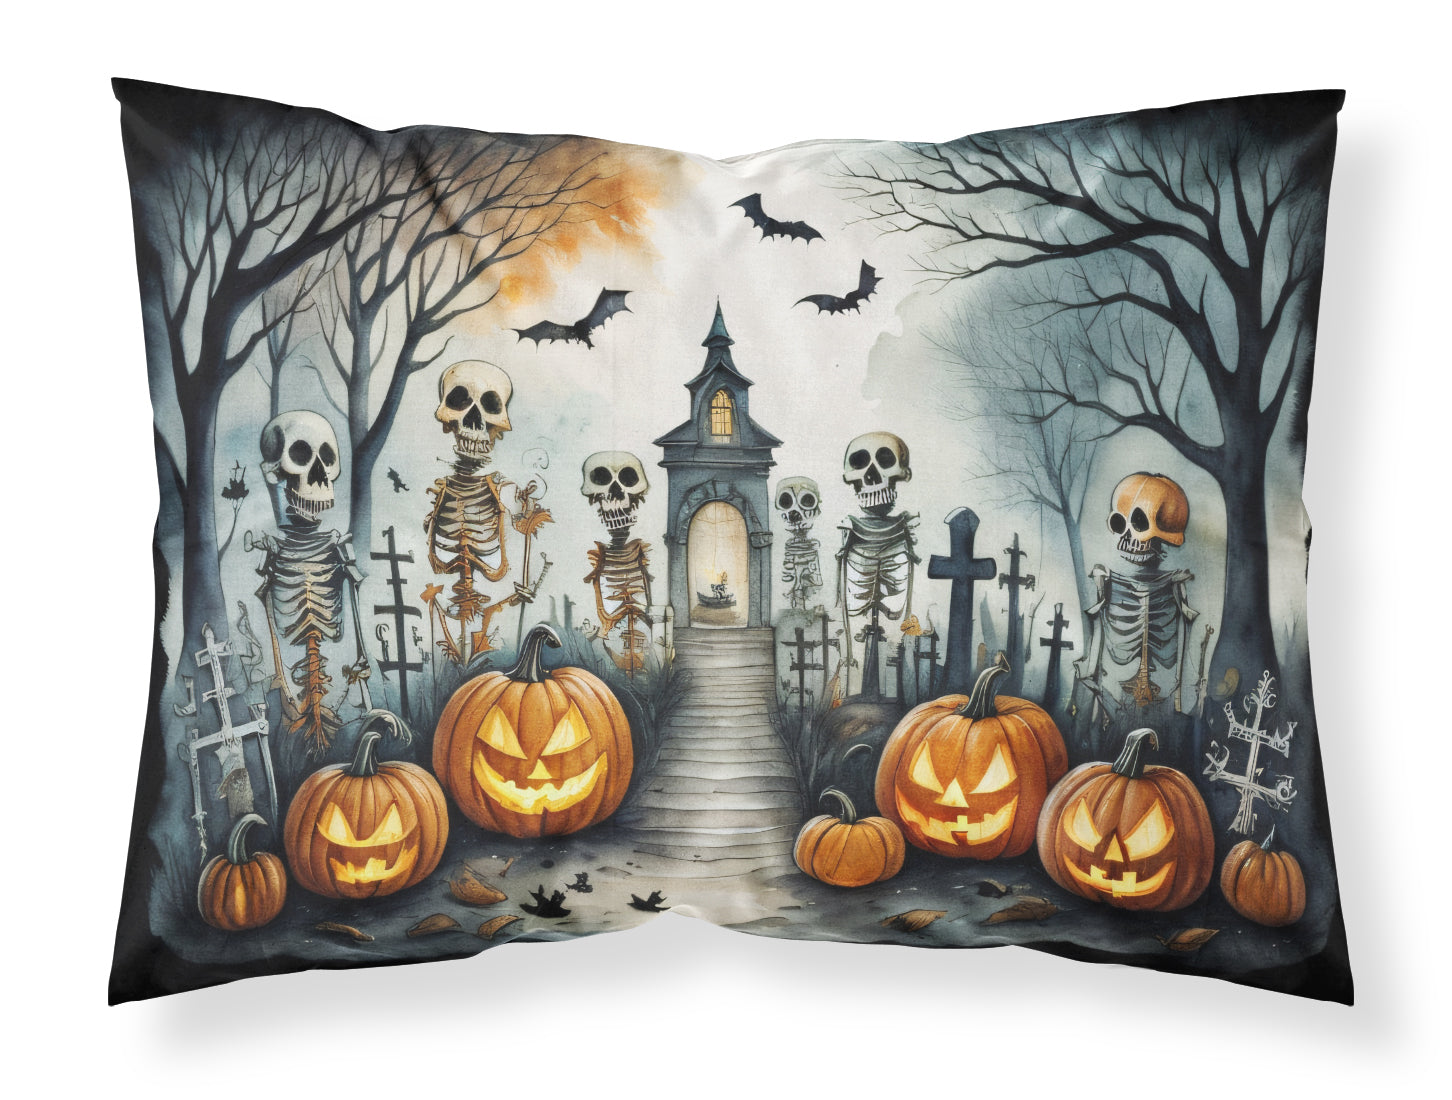 Buy this Skeleton Spooky Halloween Fabric Standard Pillowcase